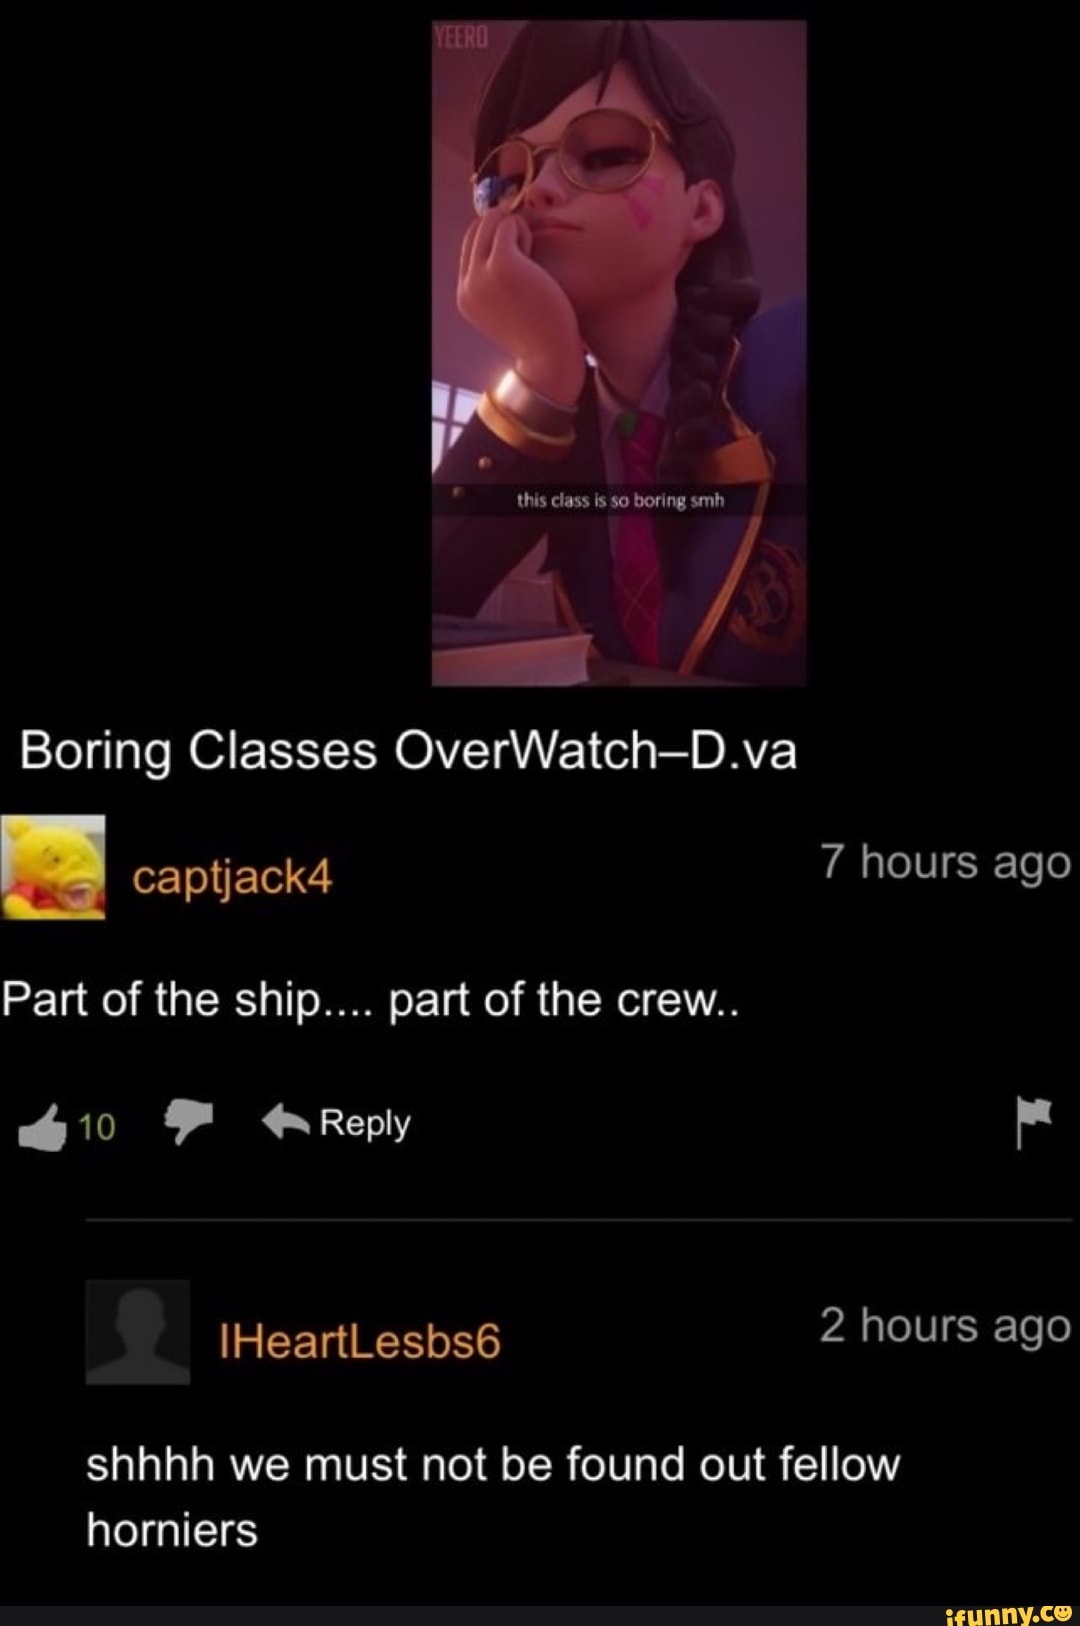 Boring classes overwatch-d.va